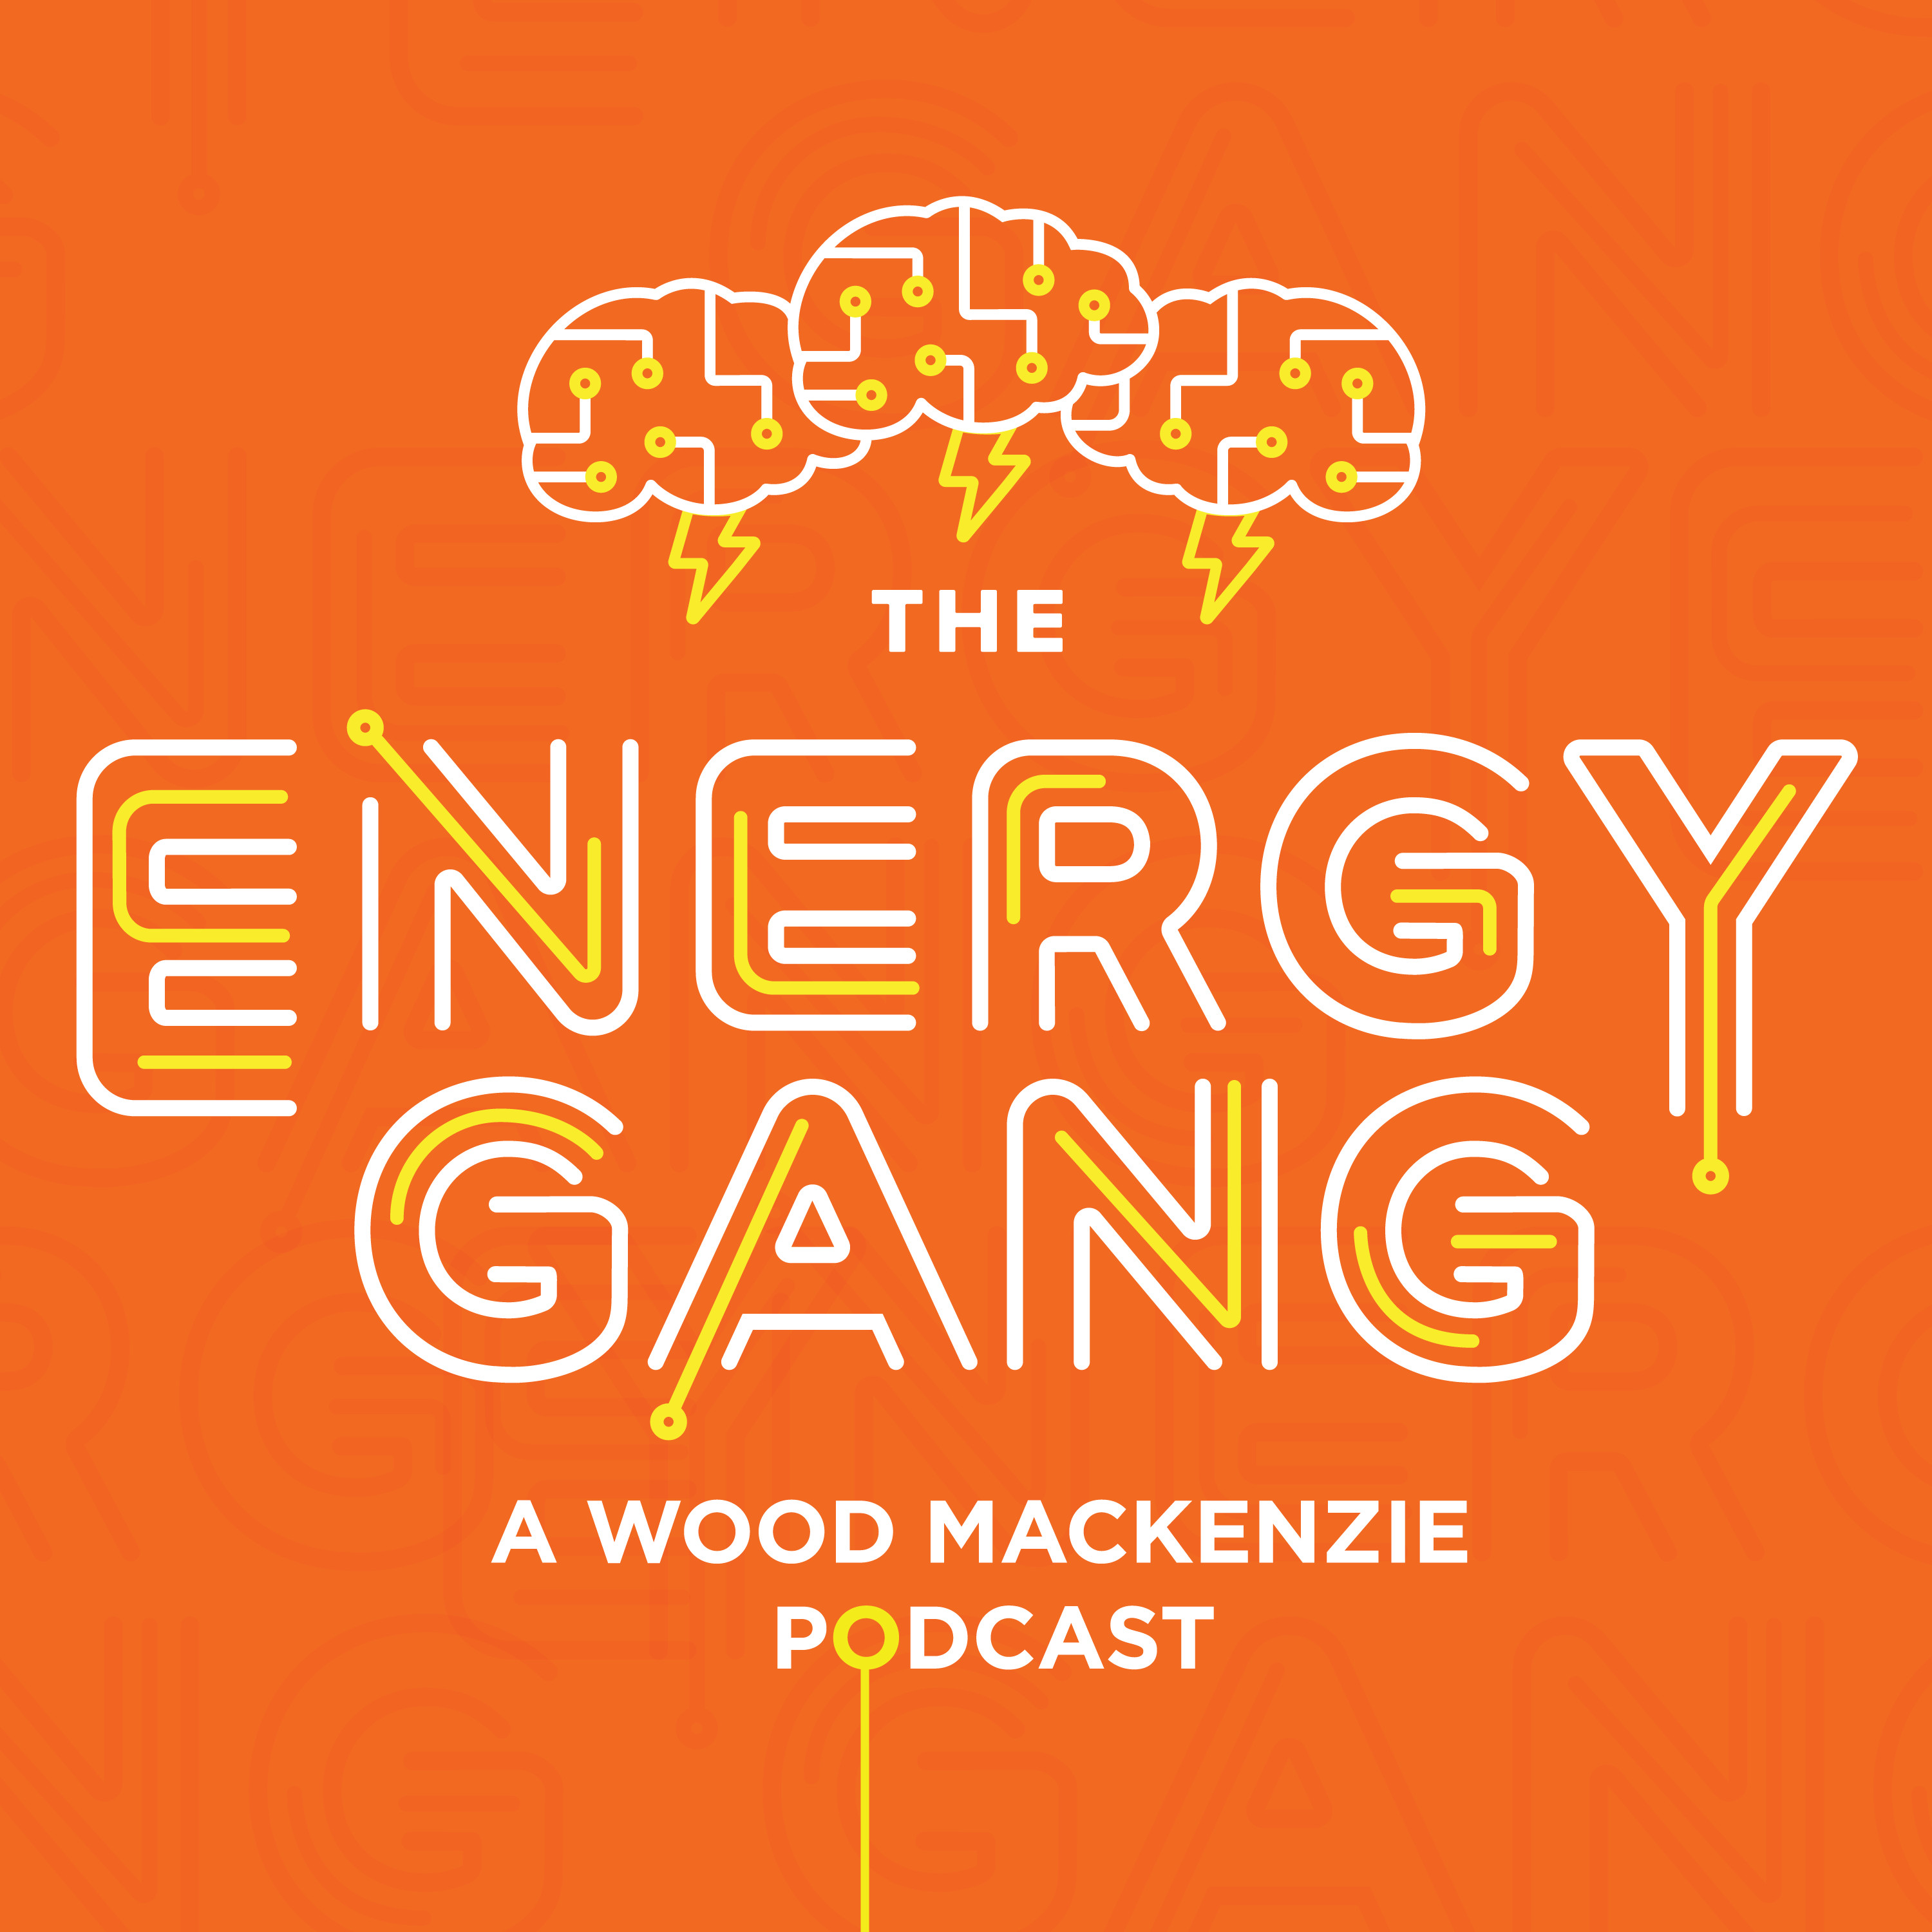 The Energy Gang